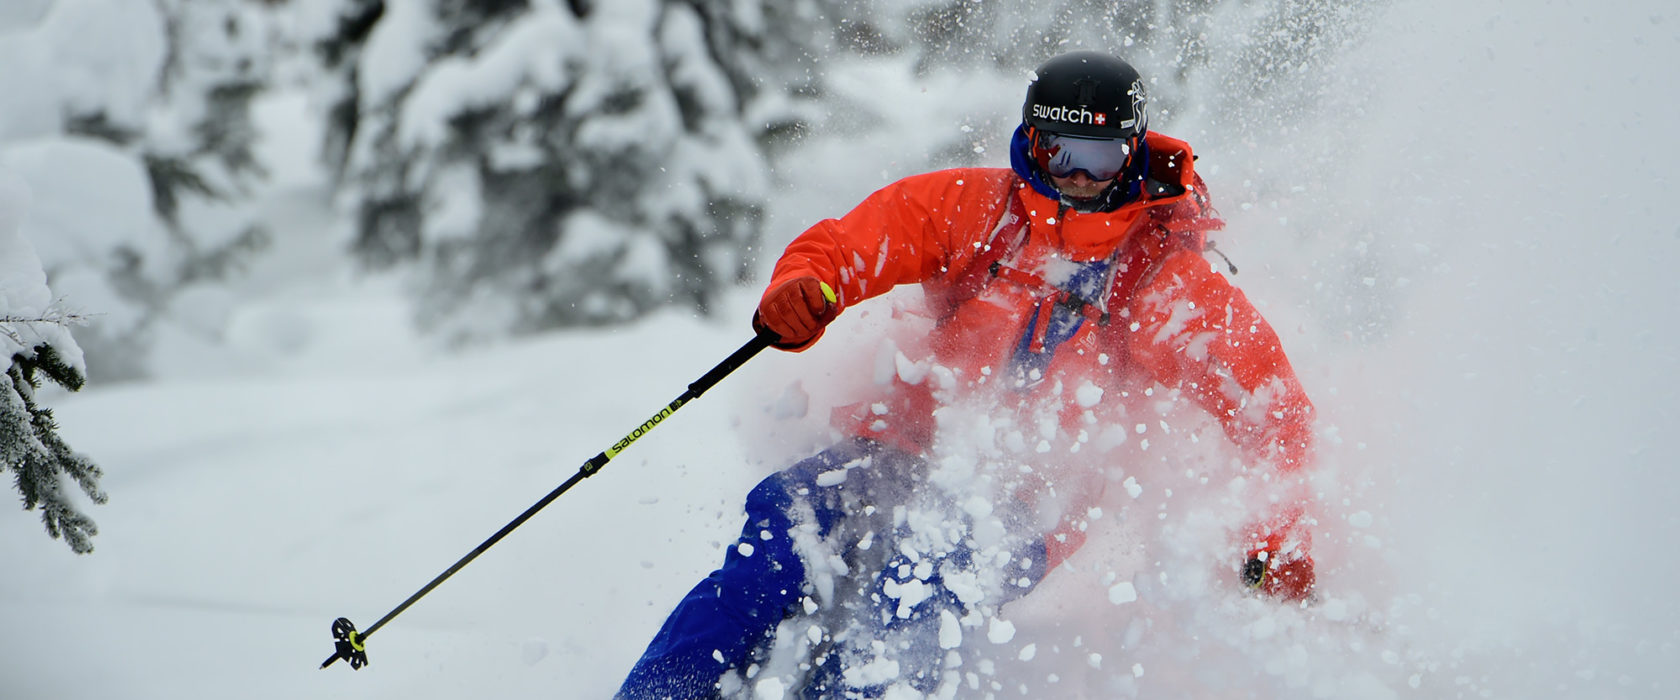 Salomon-Backcountry-Skifahrer